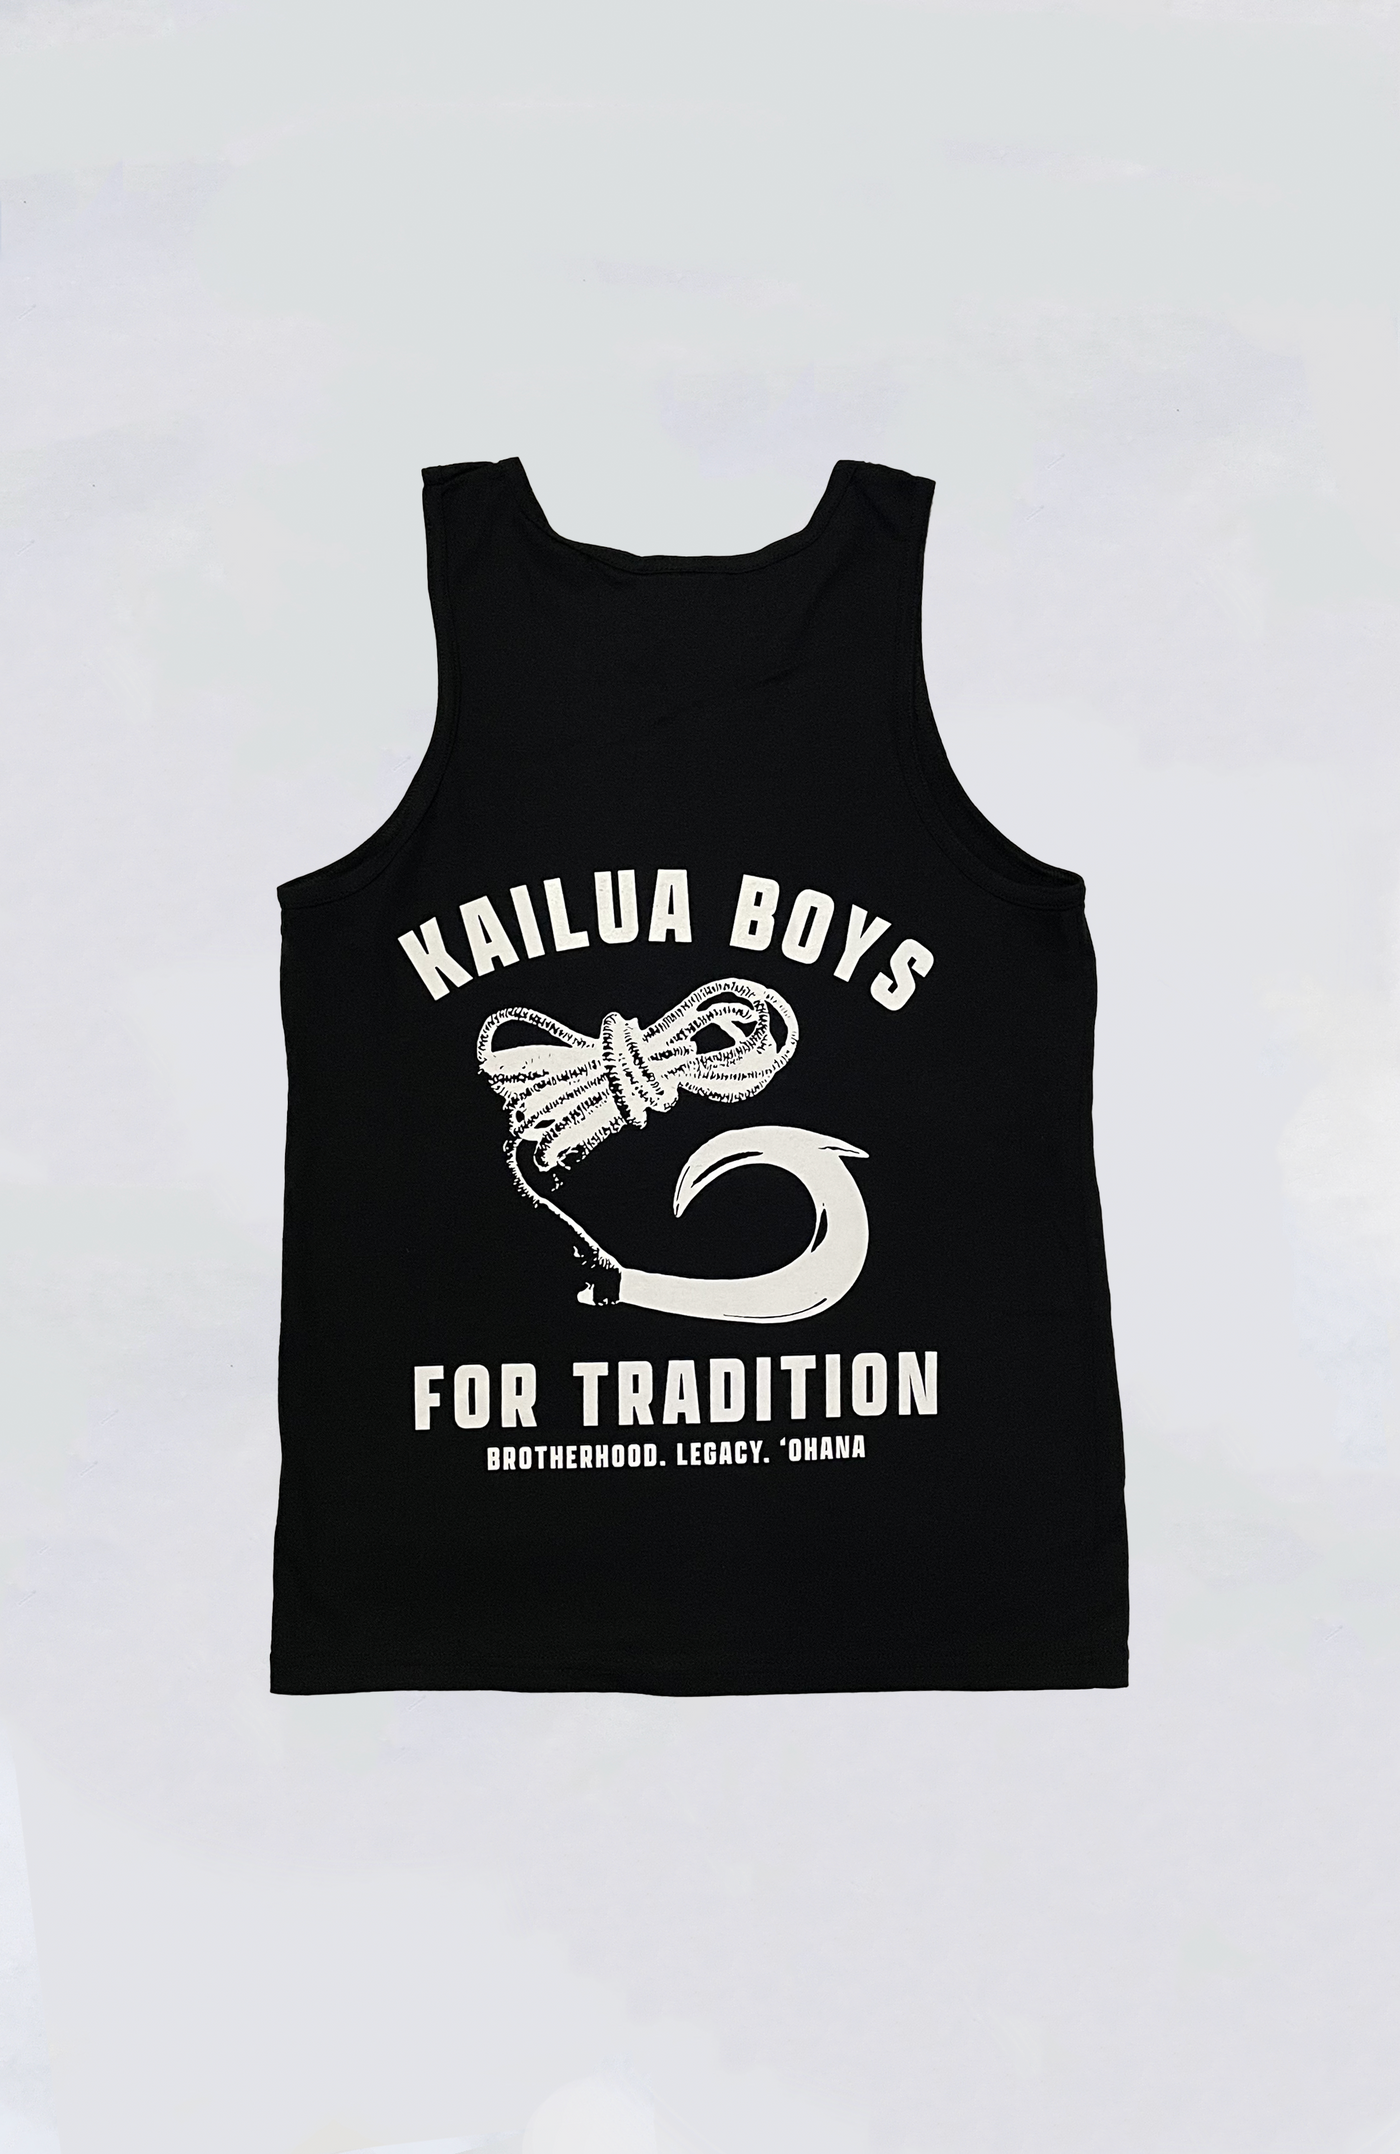 Kailua Boys Heavyweight Tank Top - KB For Tradition